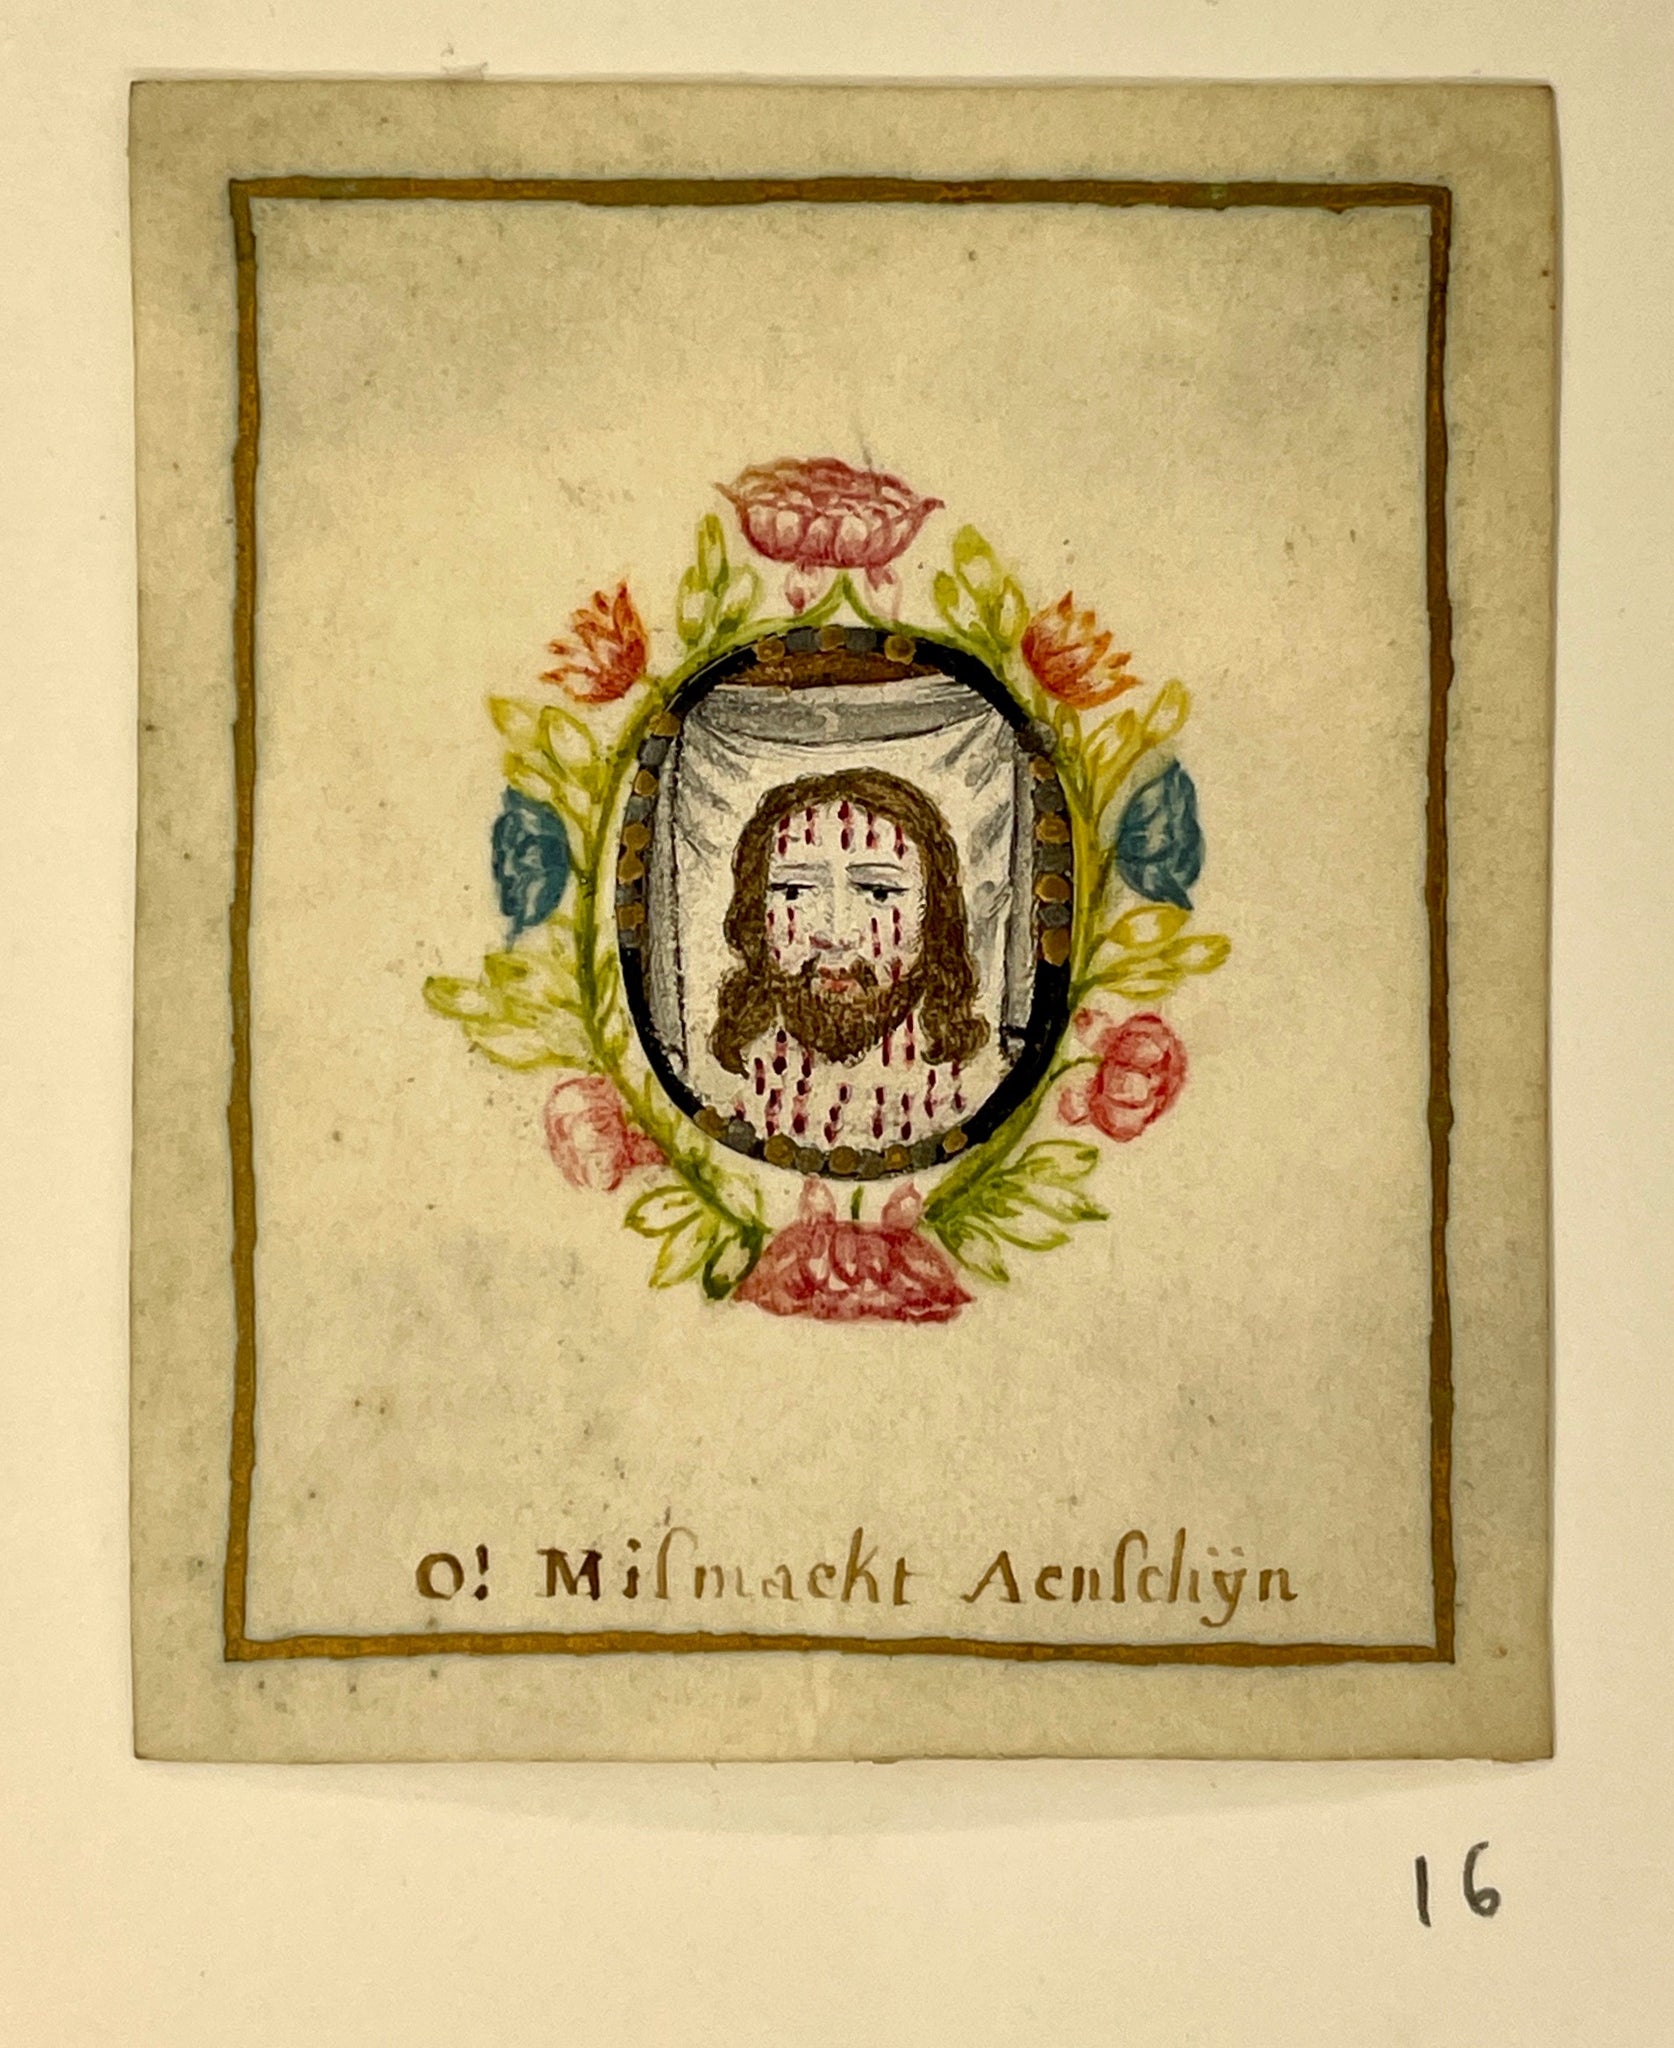 #16 - Handpainted Devotional Prayer Card, ca. 1820